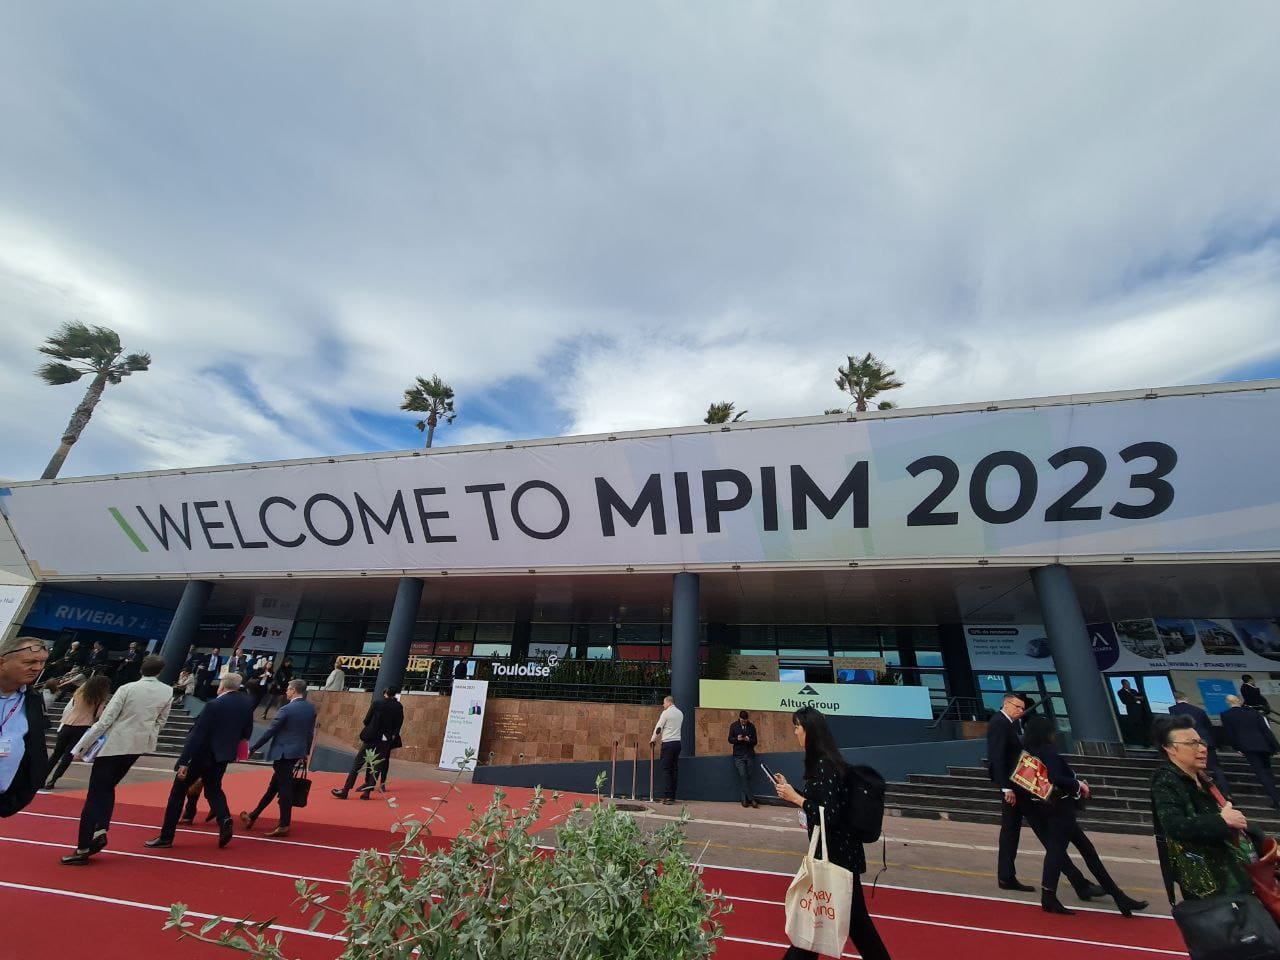 MIPIM 2023 Kicks off on March 14th INVESTGATE